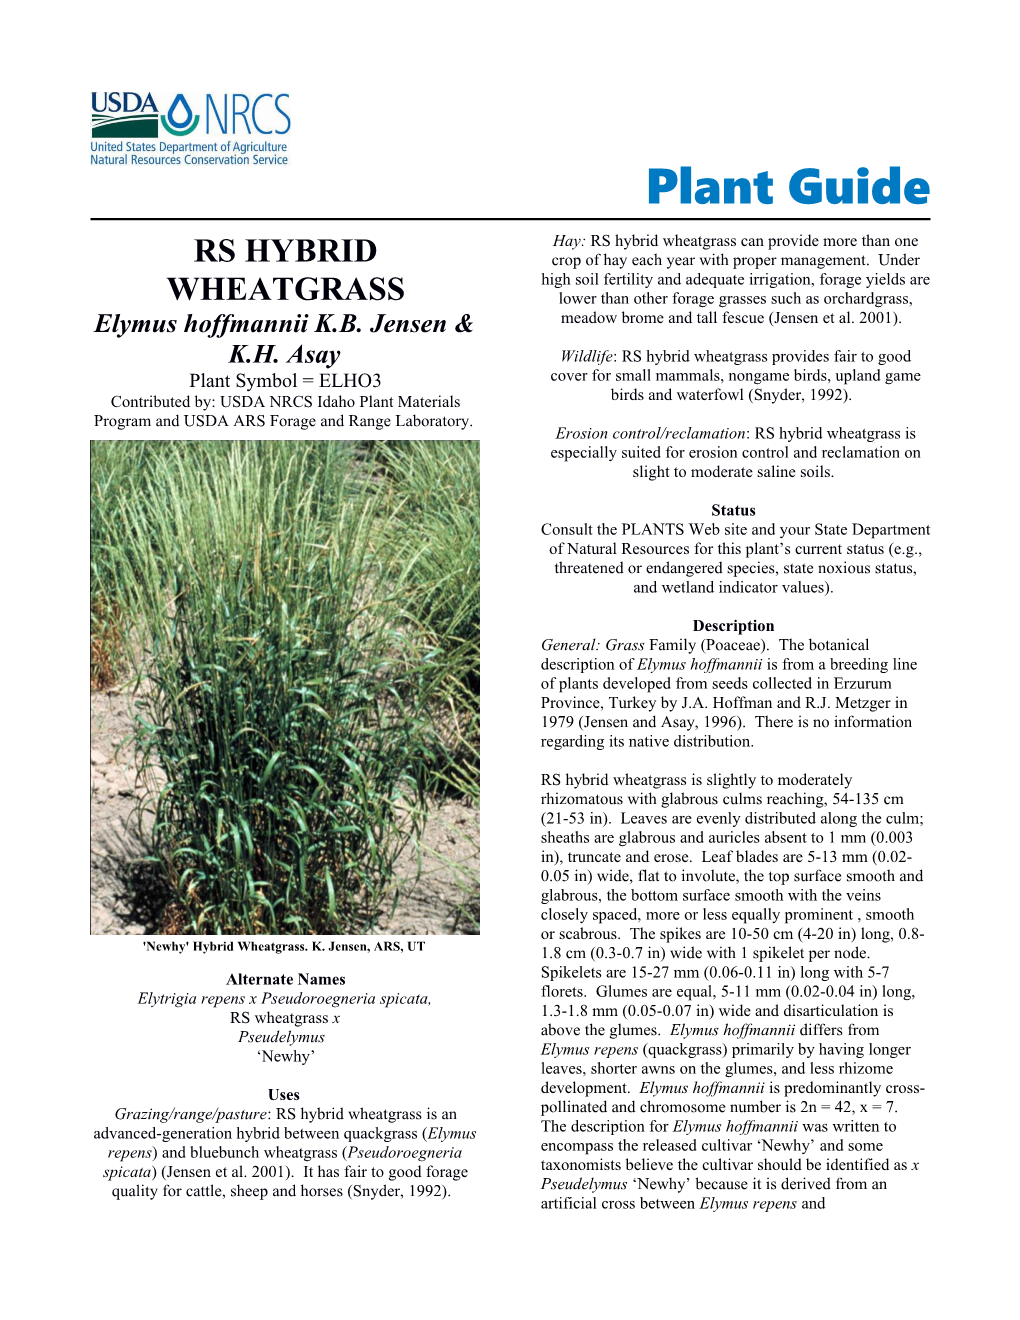 Plant Guide- RS-Hybrid Wheatgrass